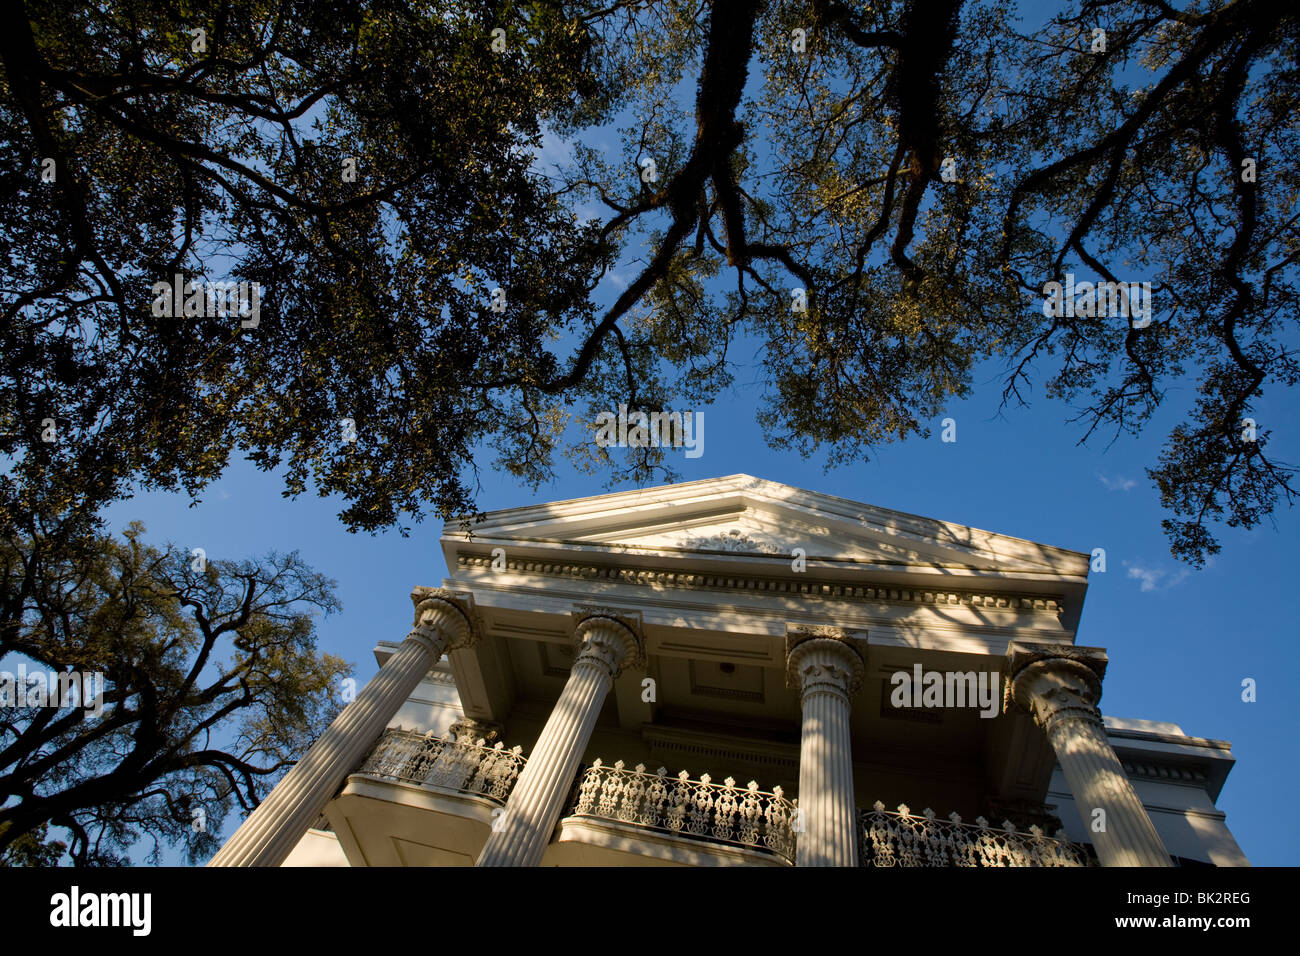 Stanton Hall, antebellum mansion à Natchez, Mississippi Banque D'Images